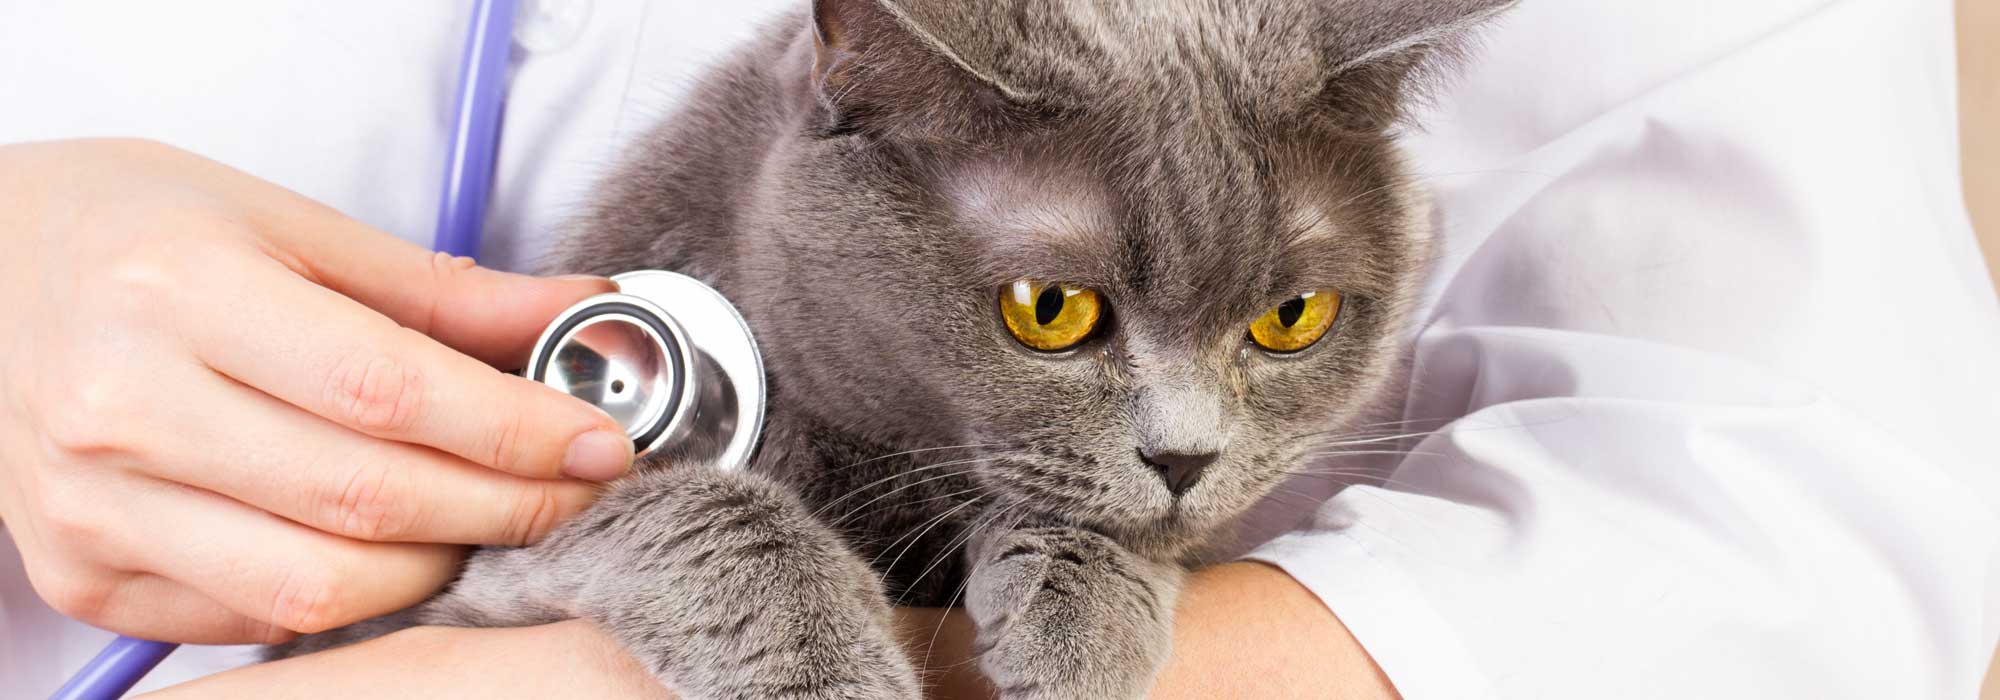 Katzenmedizin - Tierarztklinik Dr. Stadler